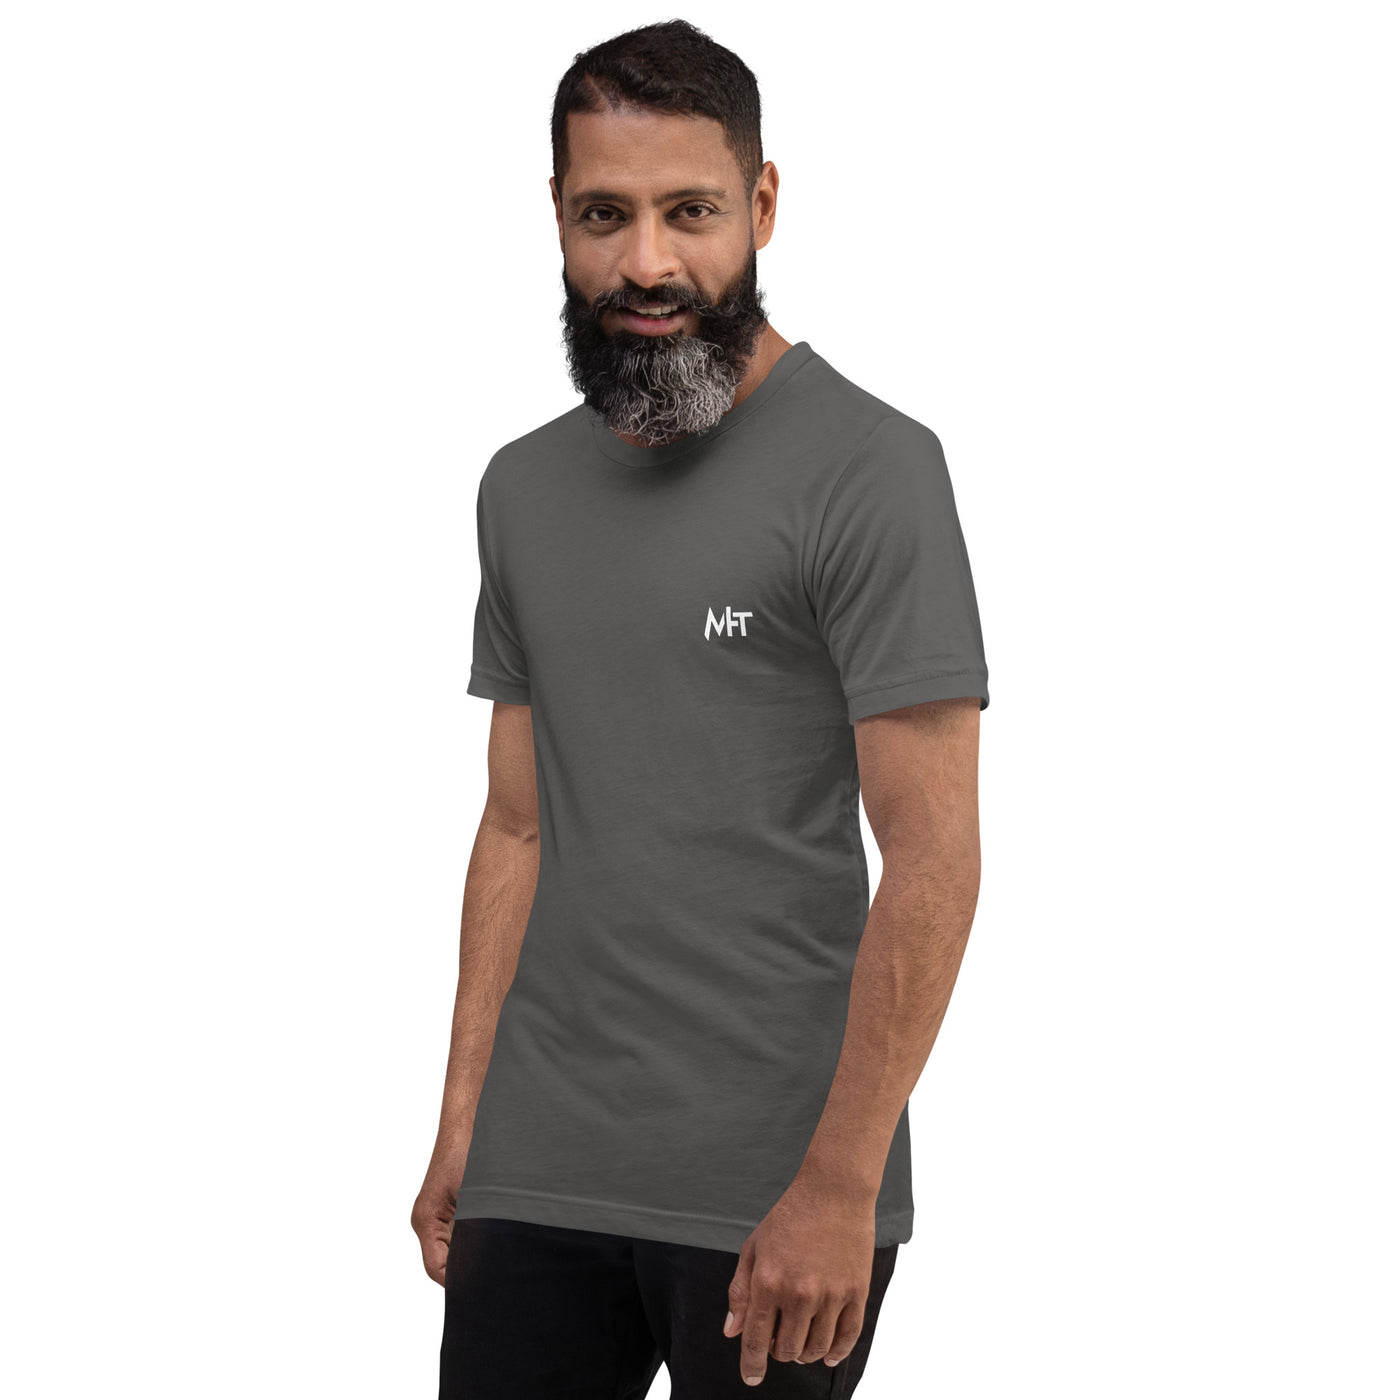 Code Injection - Unisex t-shirt (back print)